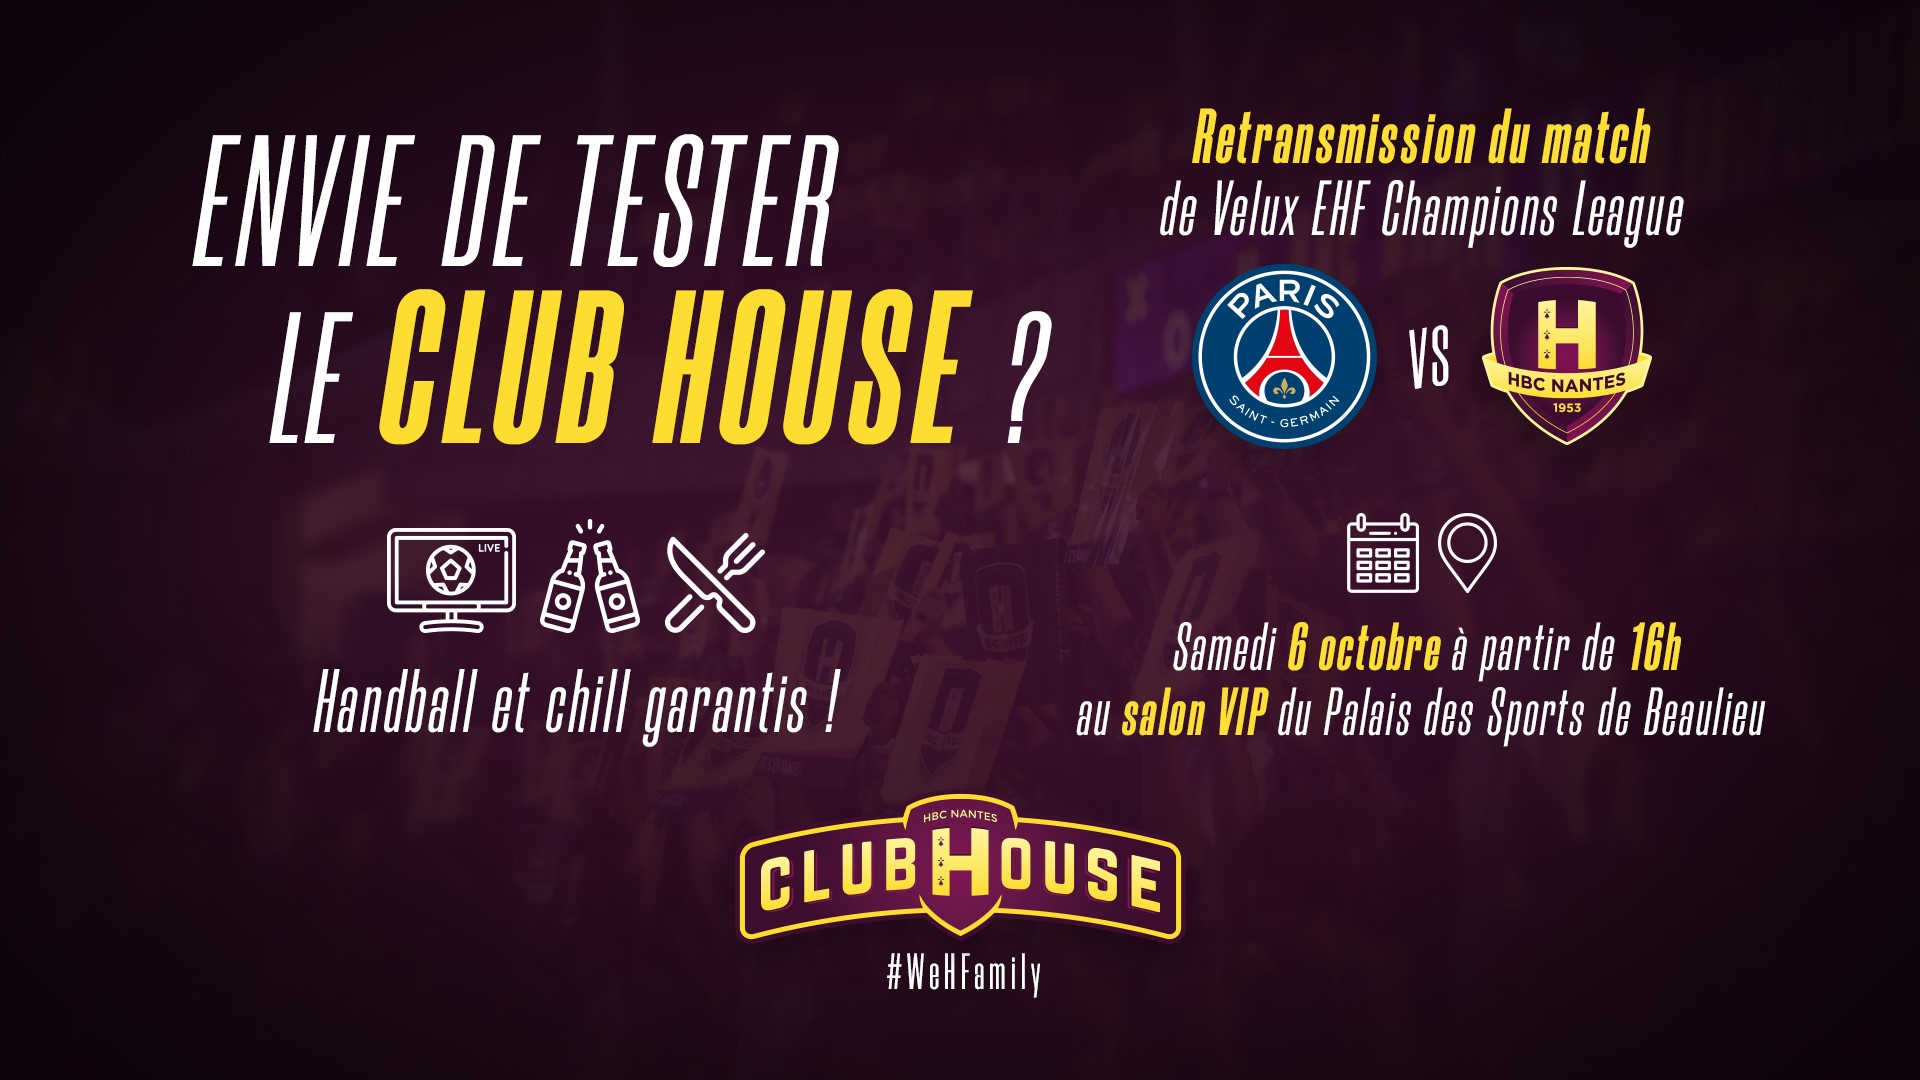 PSG-HBC Nantes: rdv au Club House !